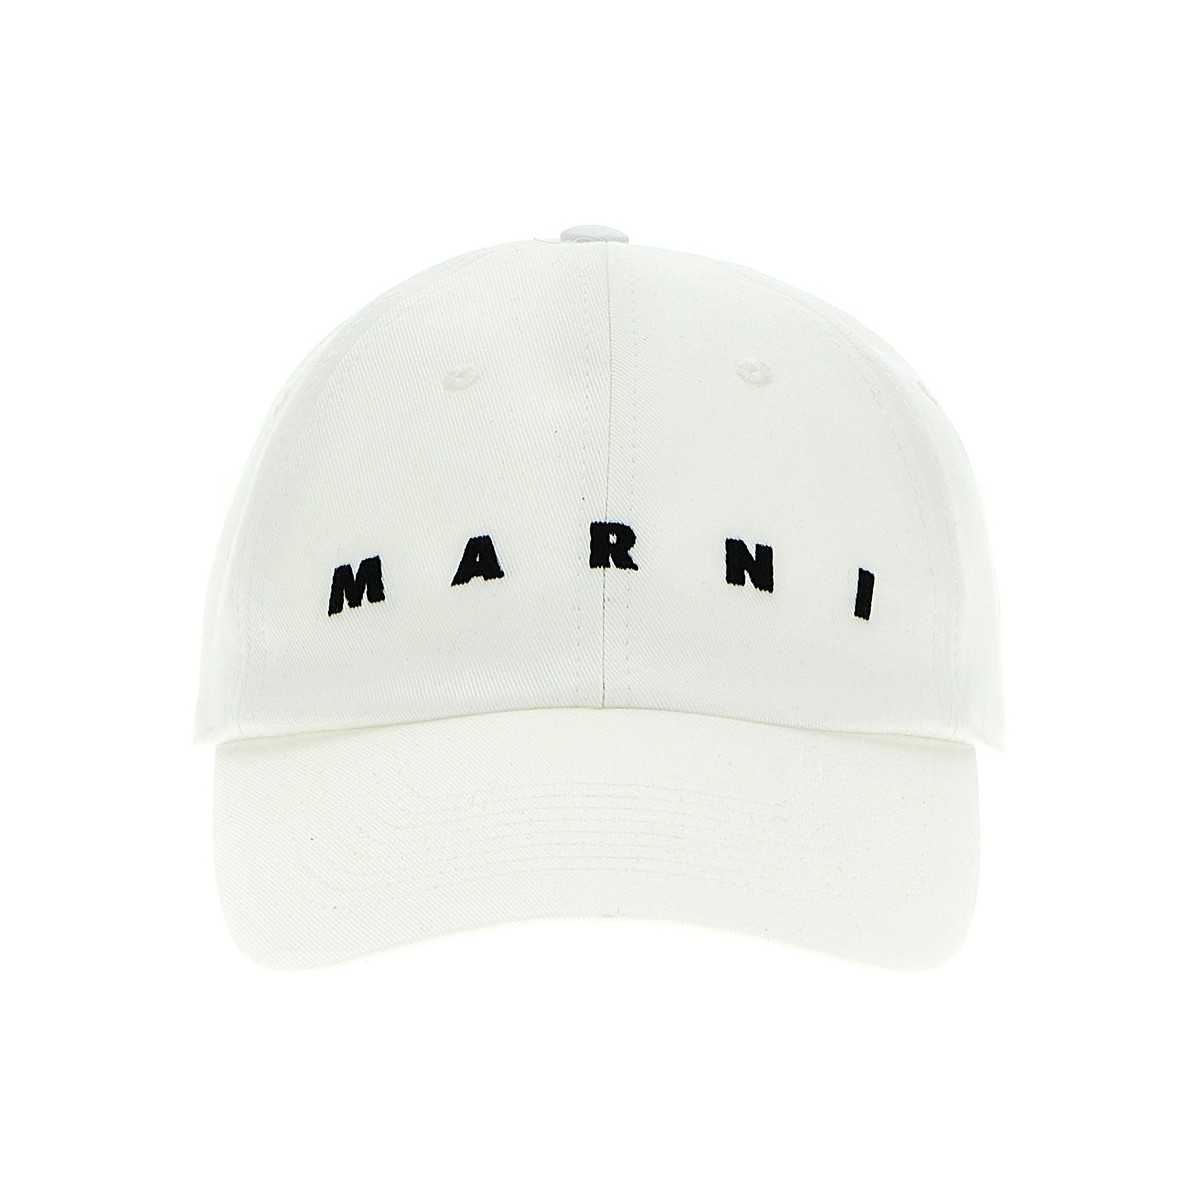 MARNI マルニ ホワイト White Logo embroidery cap 帽子 メンズ 春夏 ...